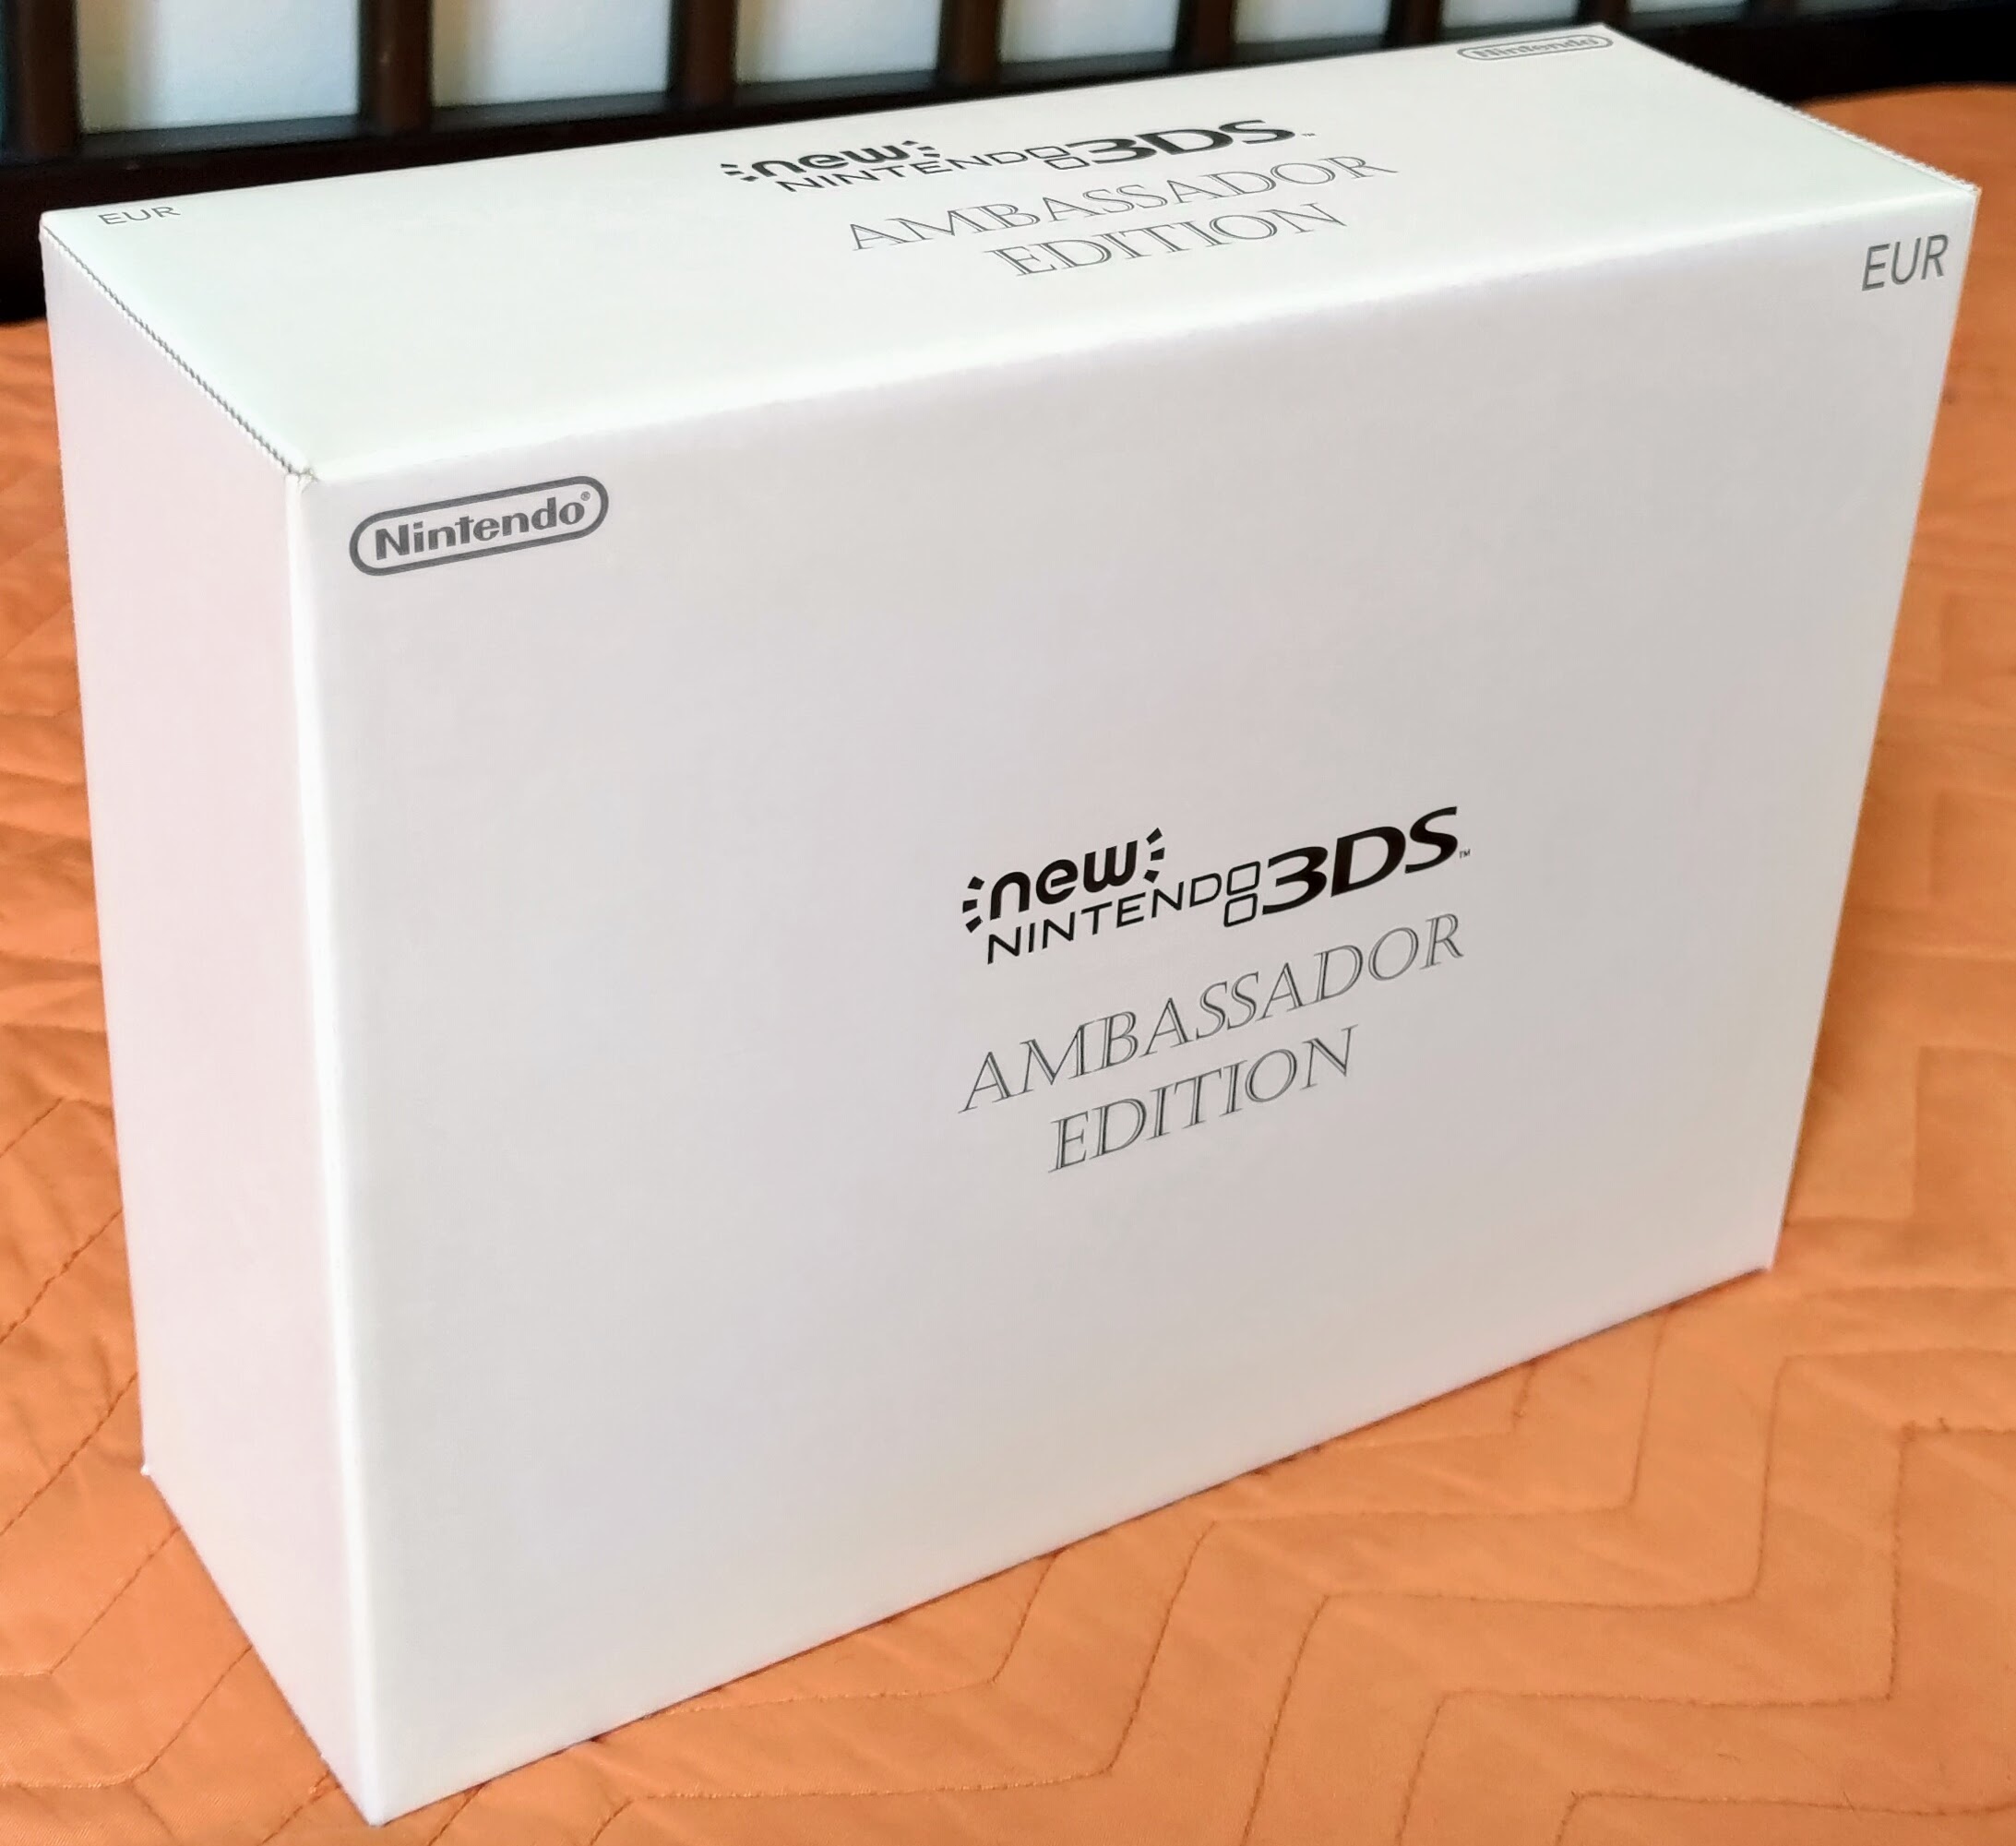 New Nintendo 3DS Ambassador Edition Bundle